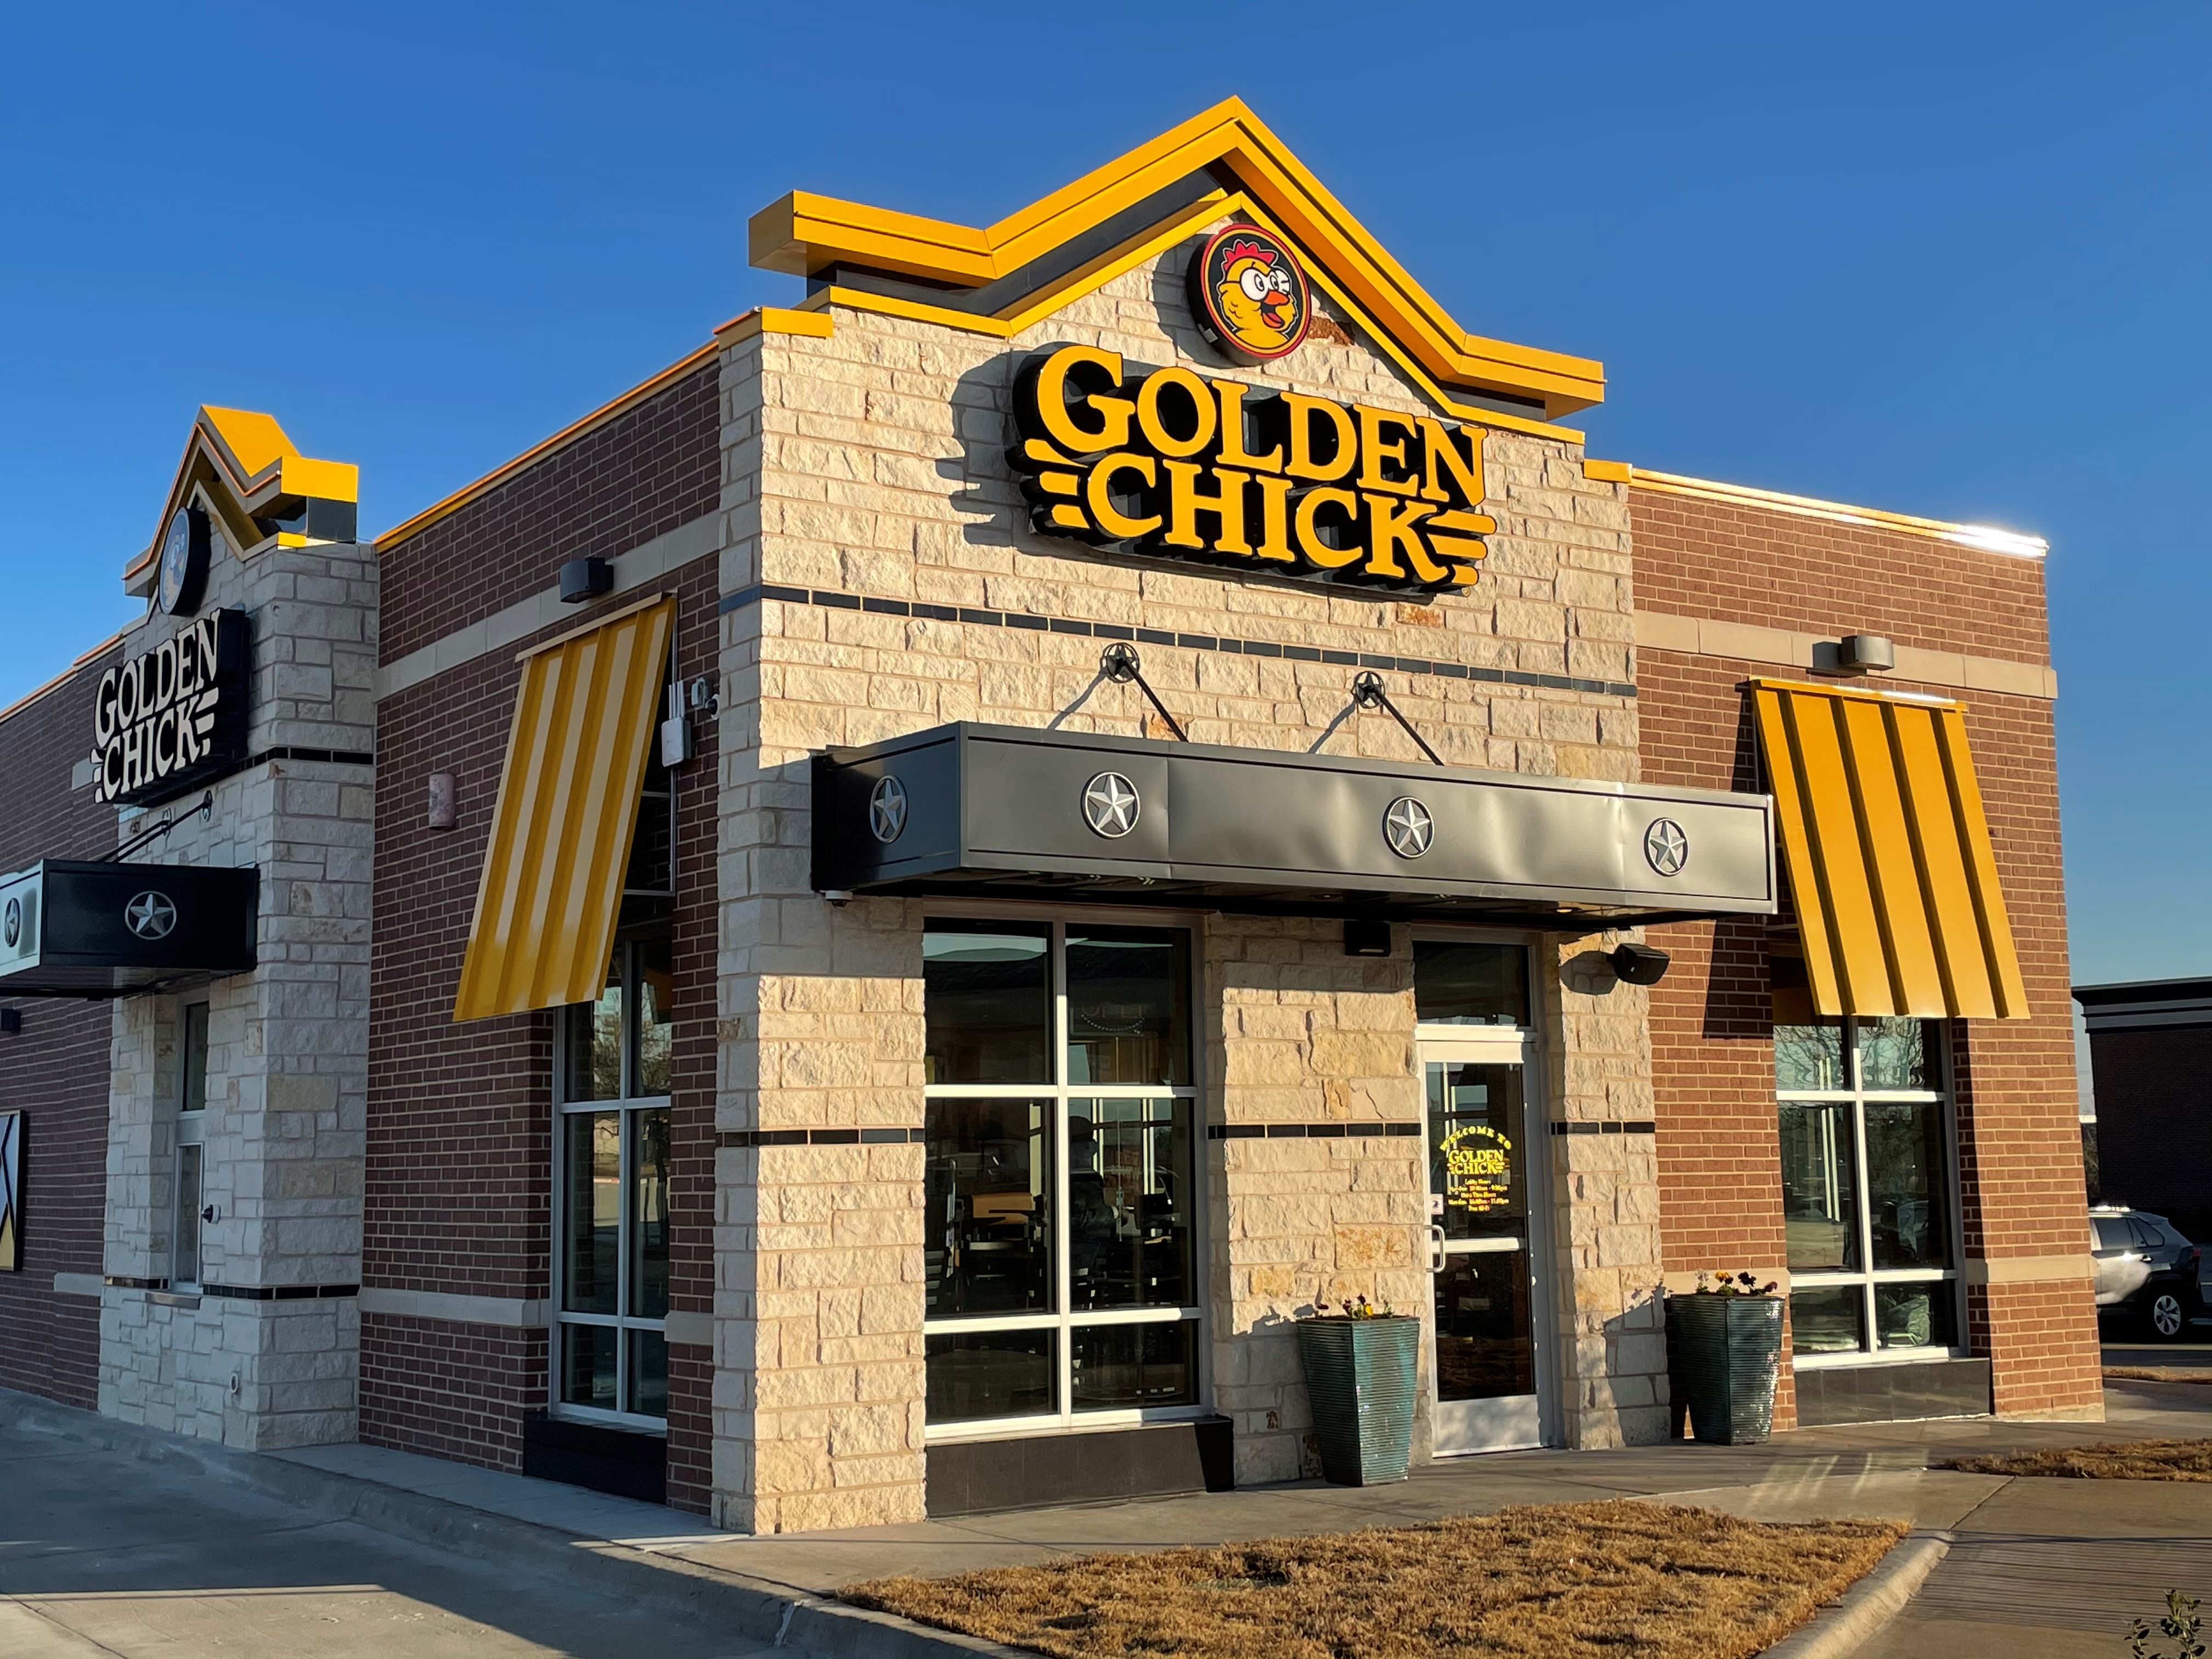 Golden Chick storefront.  Your local Golden Chick fast food restaurant in Allen, Texas